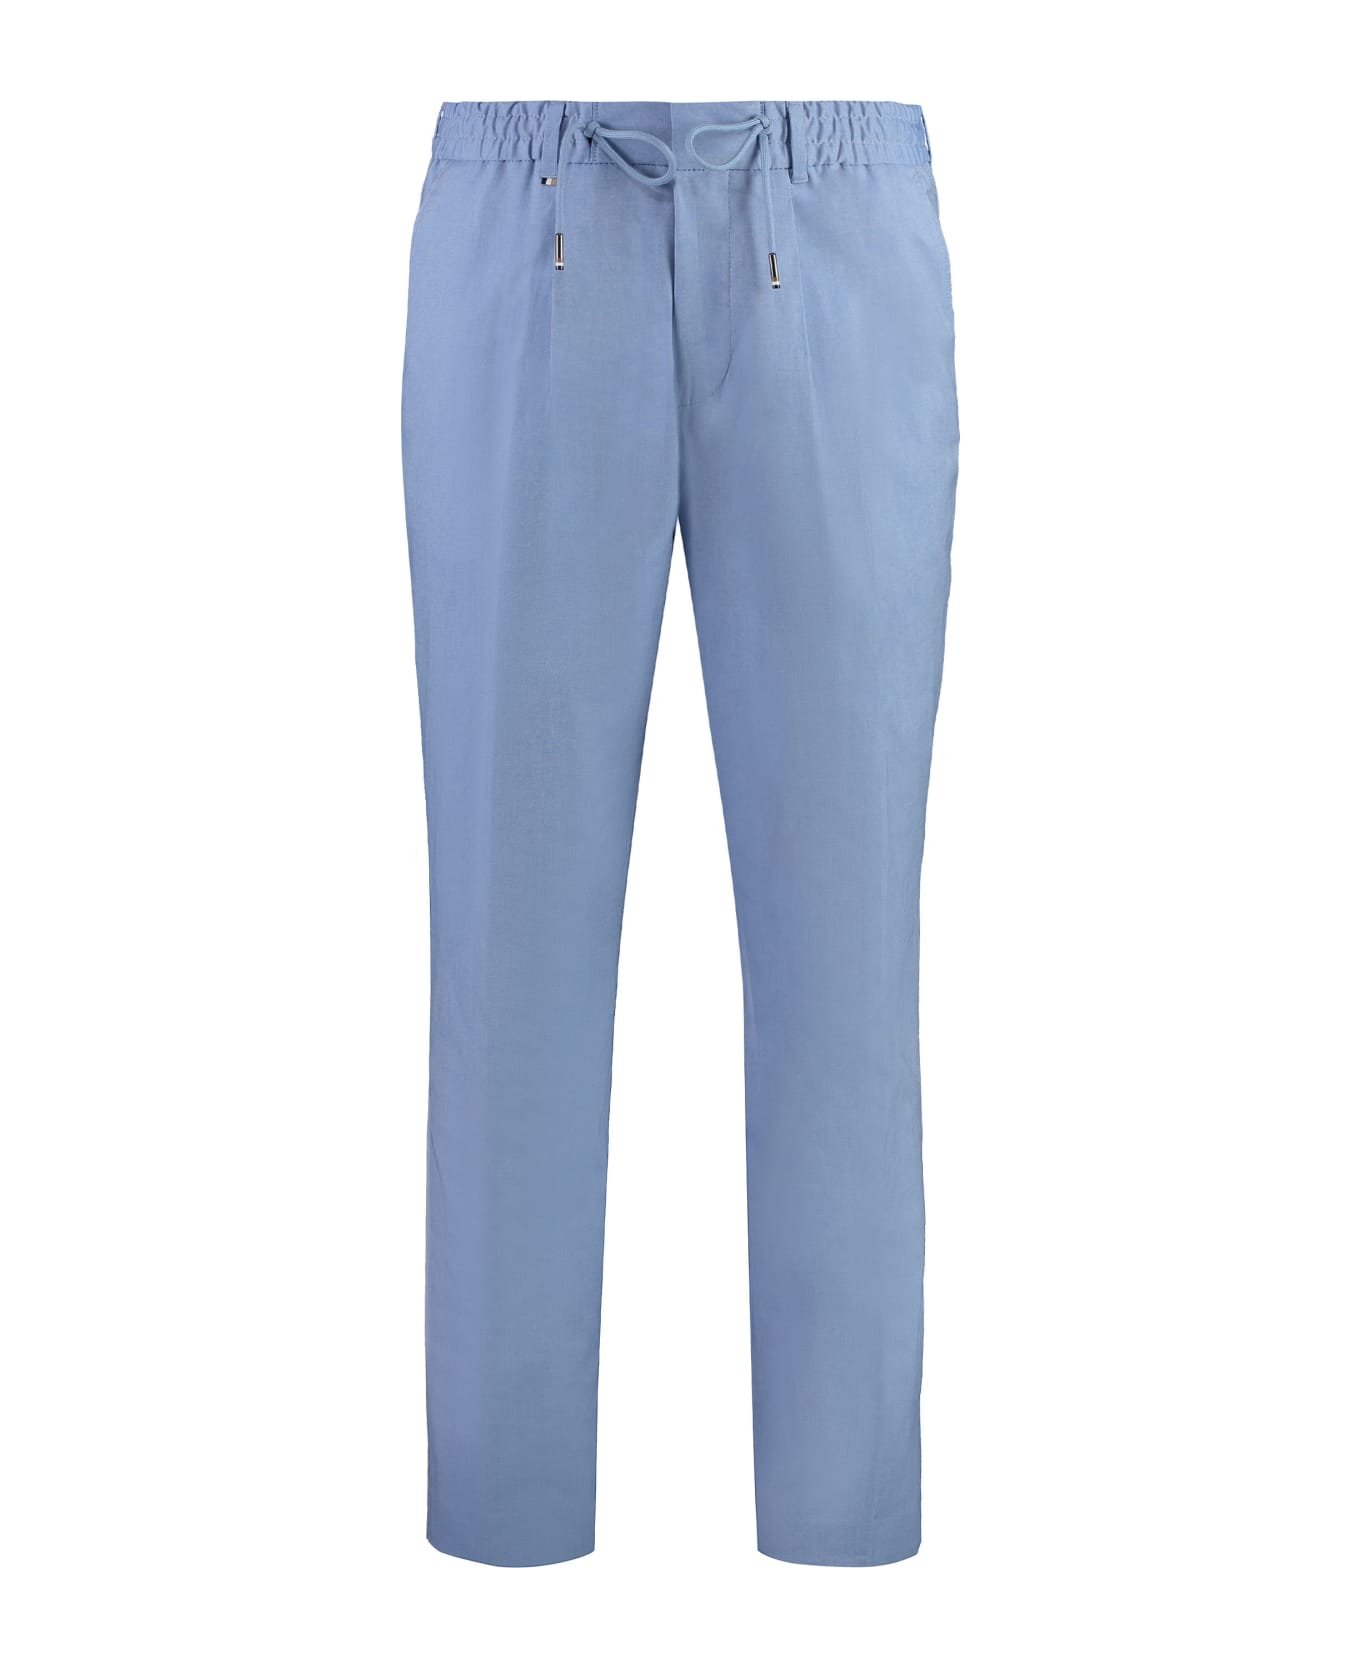 Hugo Boss Cotton Trousers - Light Blue